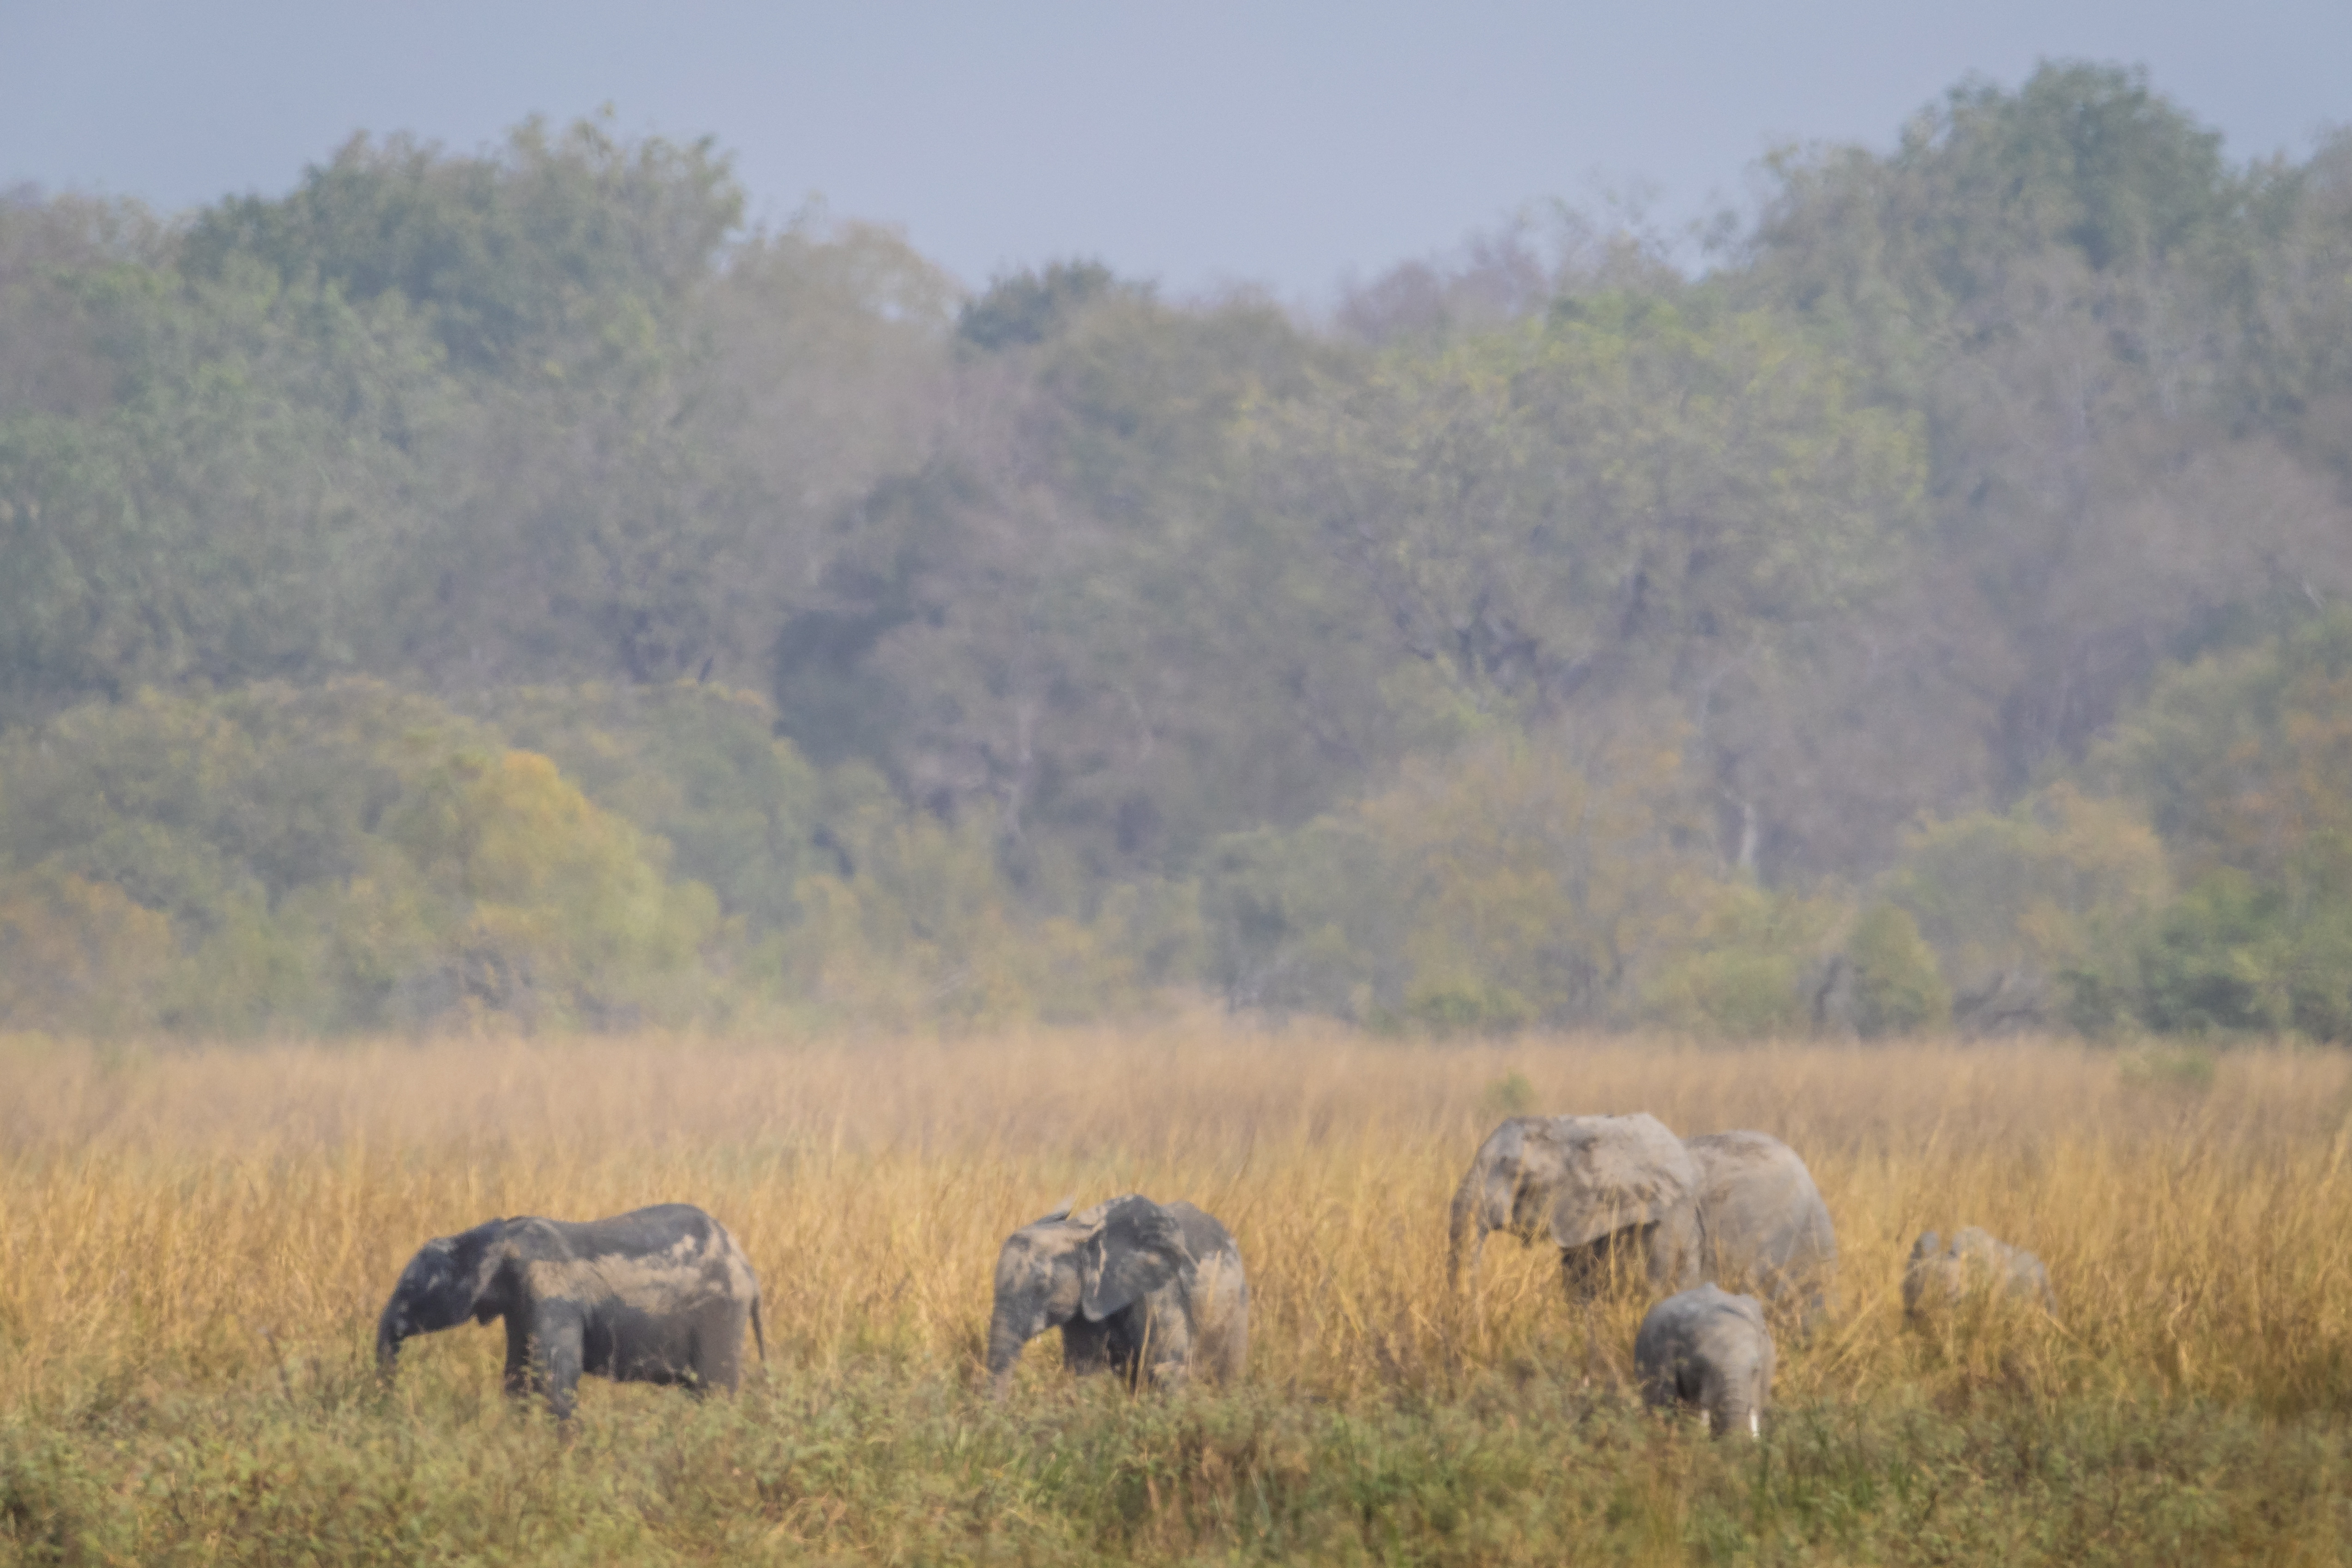 Elephants are pictured in Pendjari National Park in northern Benin